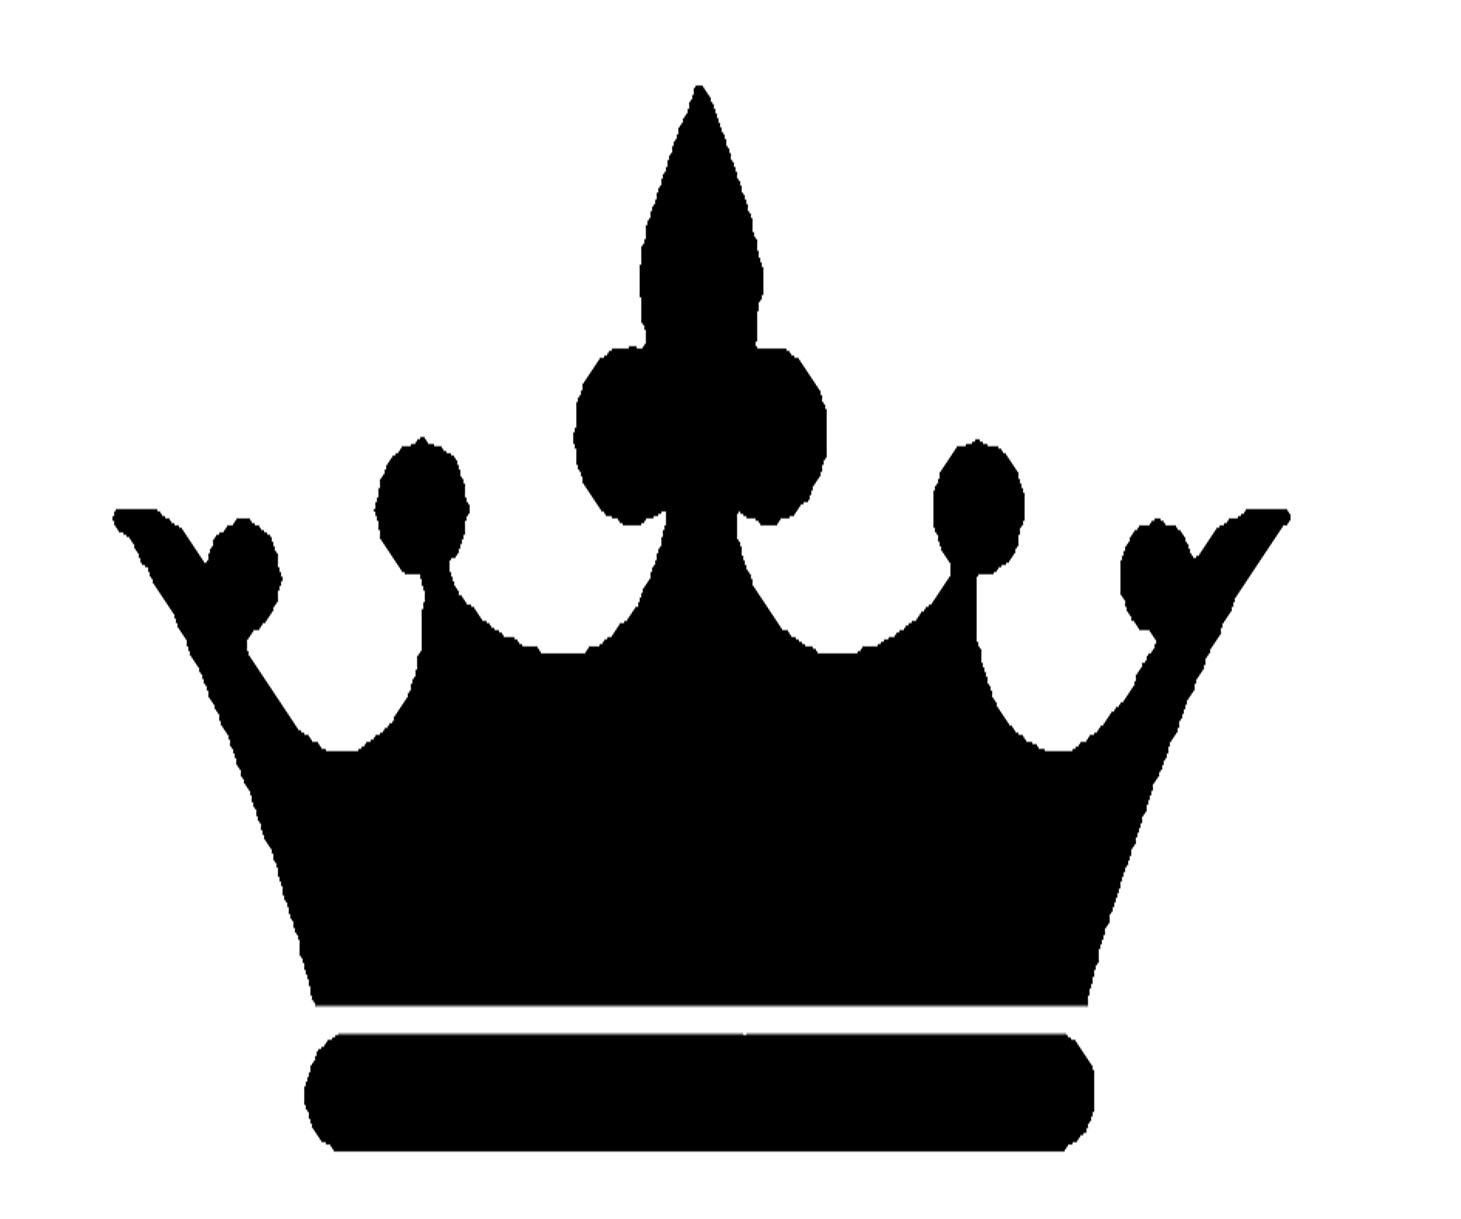 Clip art crown